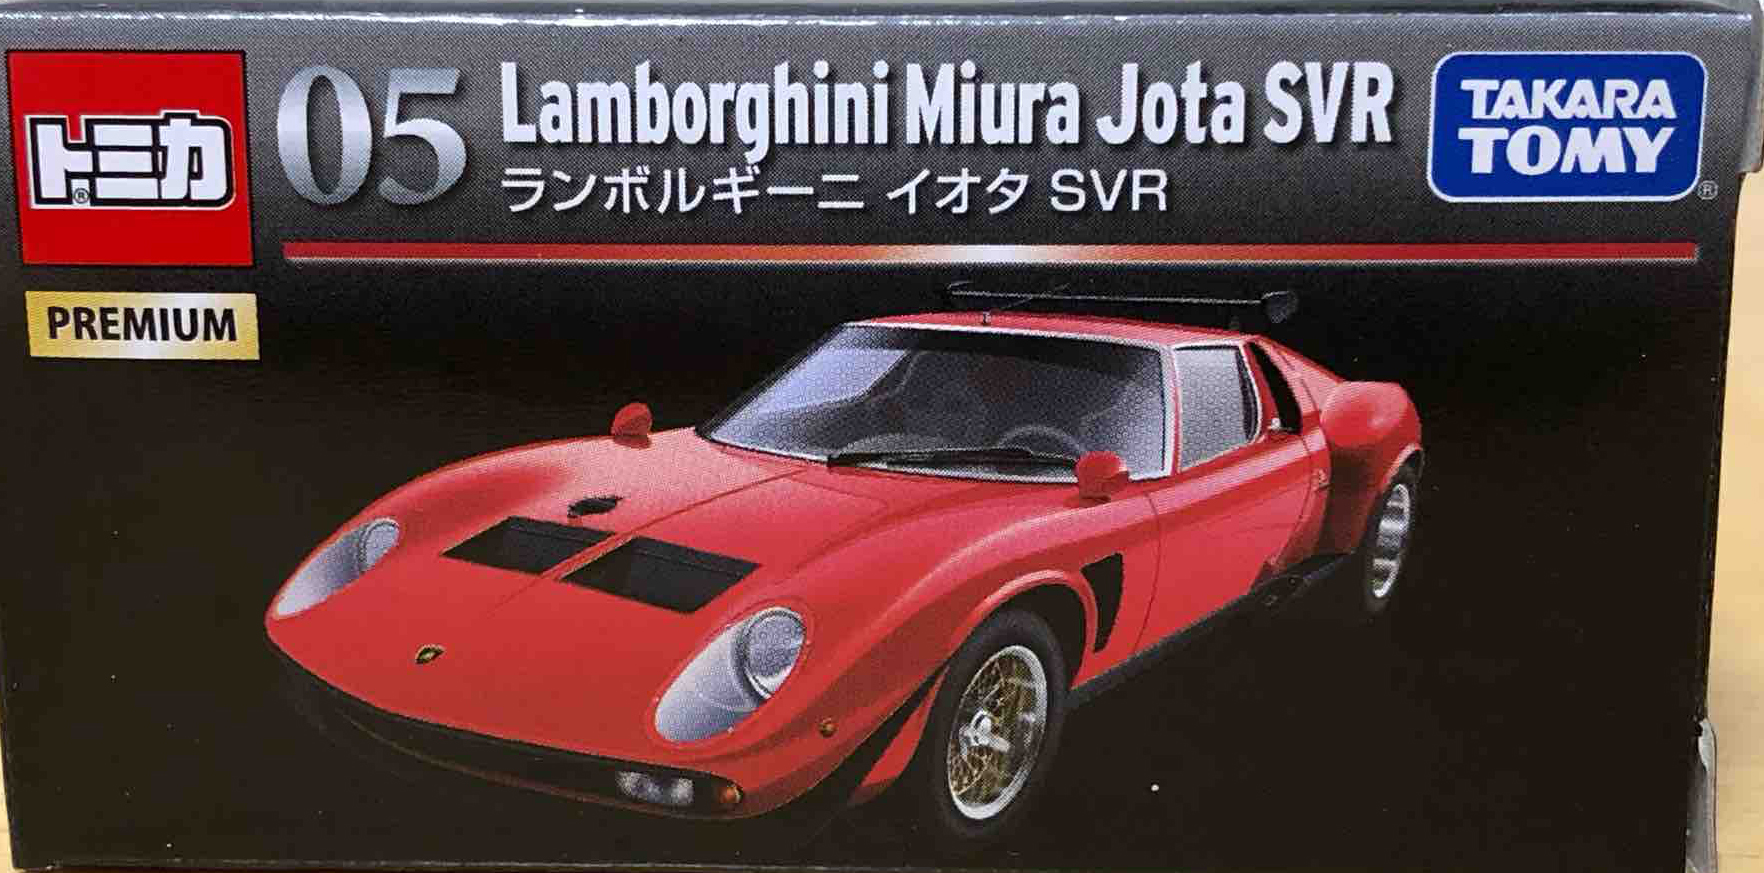 Premium No. 05 Lamborghini Miura Jota SVR | Tomica Wiki | Fandom